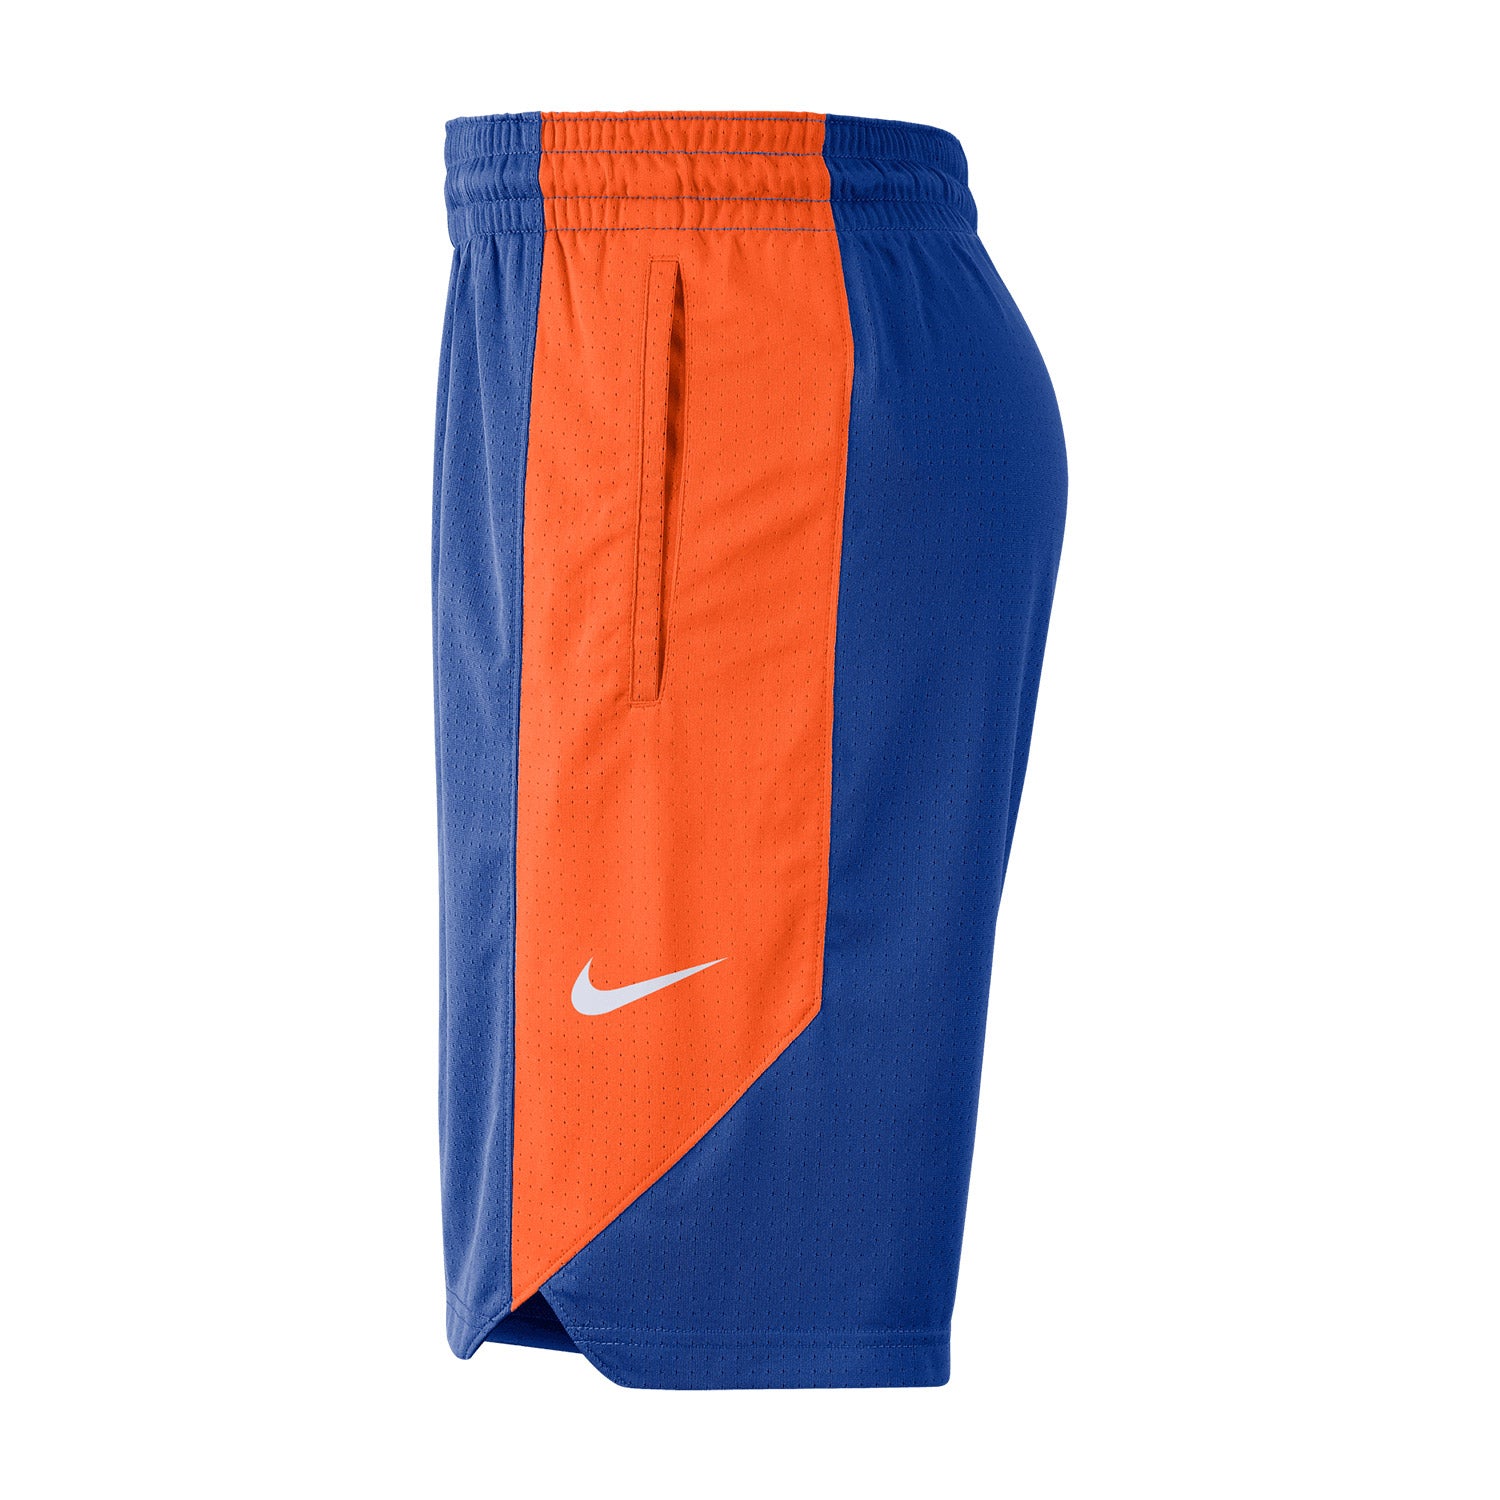 Nike Knicks Dri-fit Practice Shorts In Blue & Orange - Left Side View